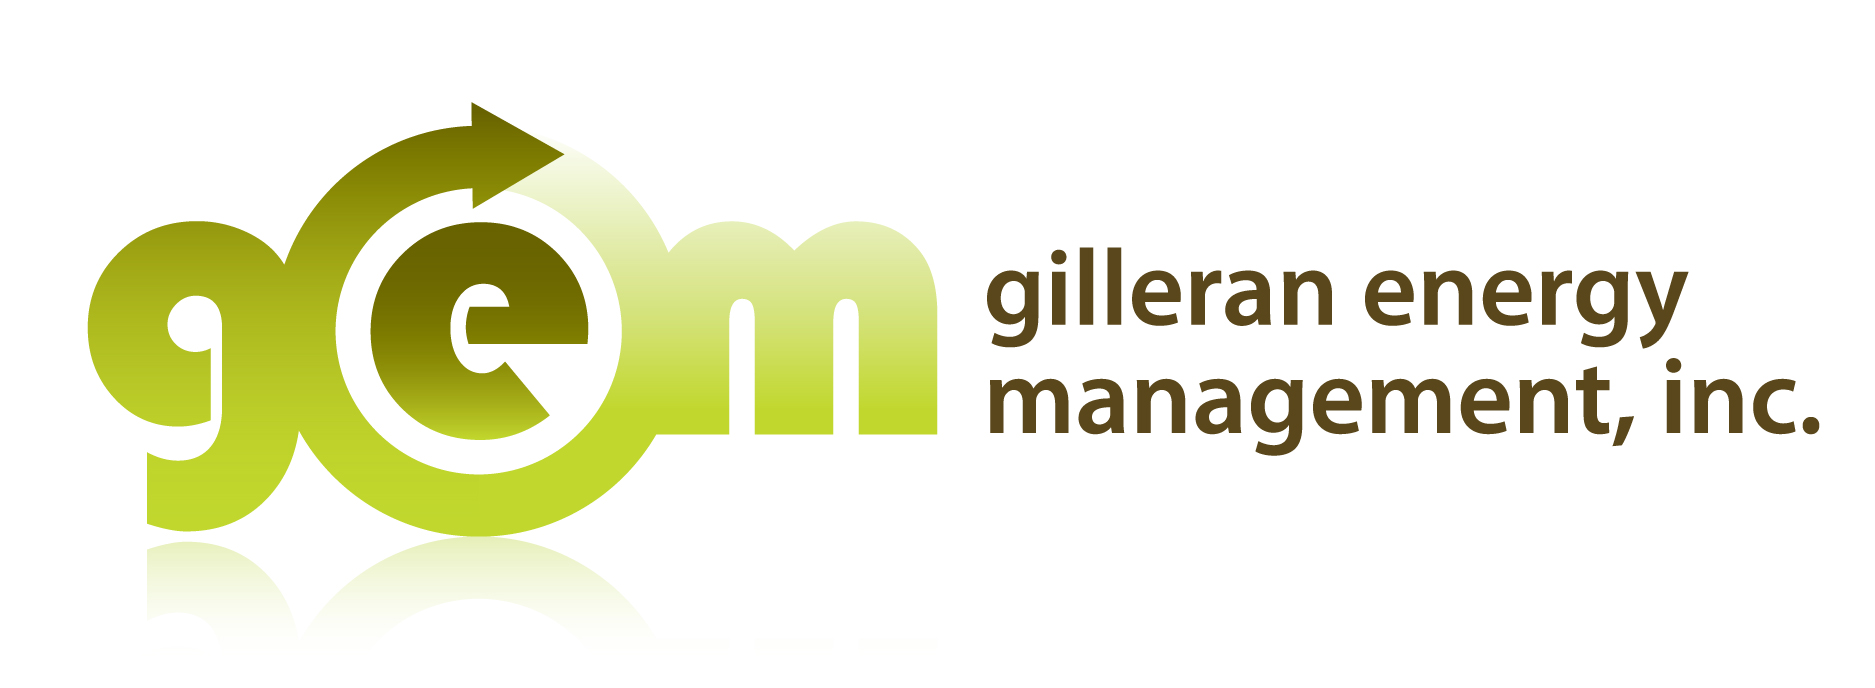 Gilleran Energy Management, Inc.  company logo